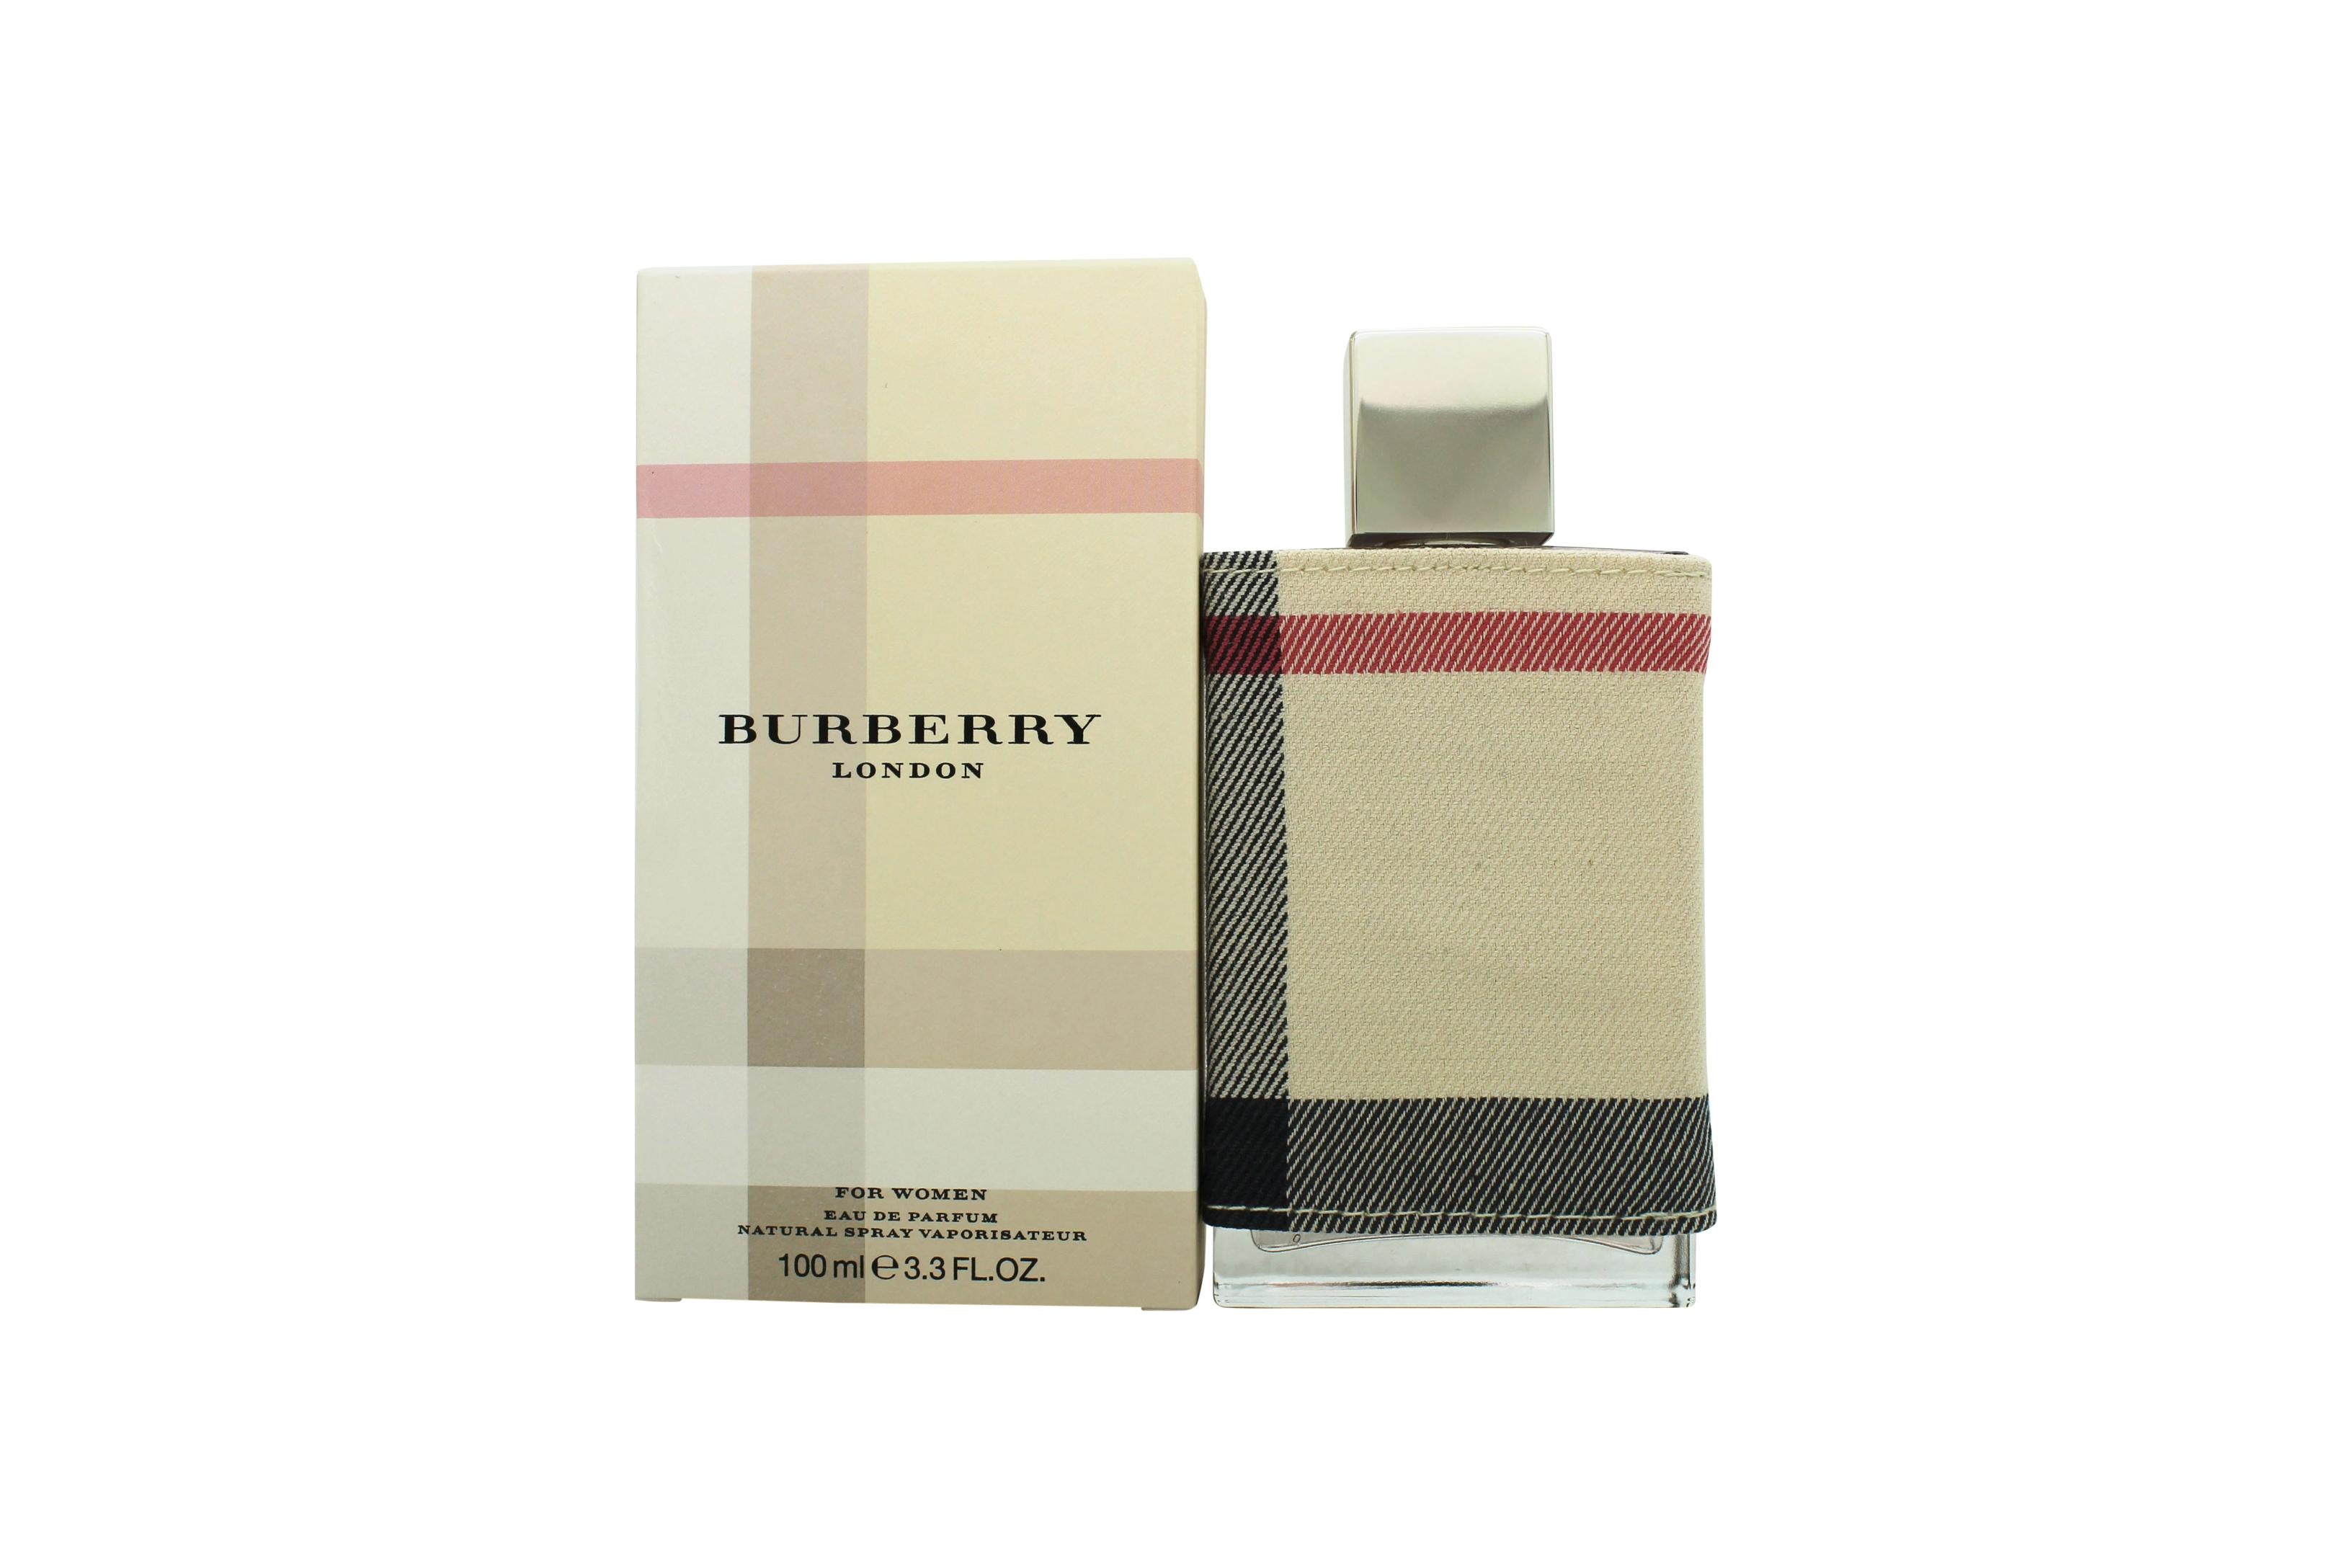 View Burberry London Eau de Parfum 100ml Spray information